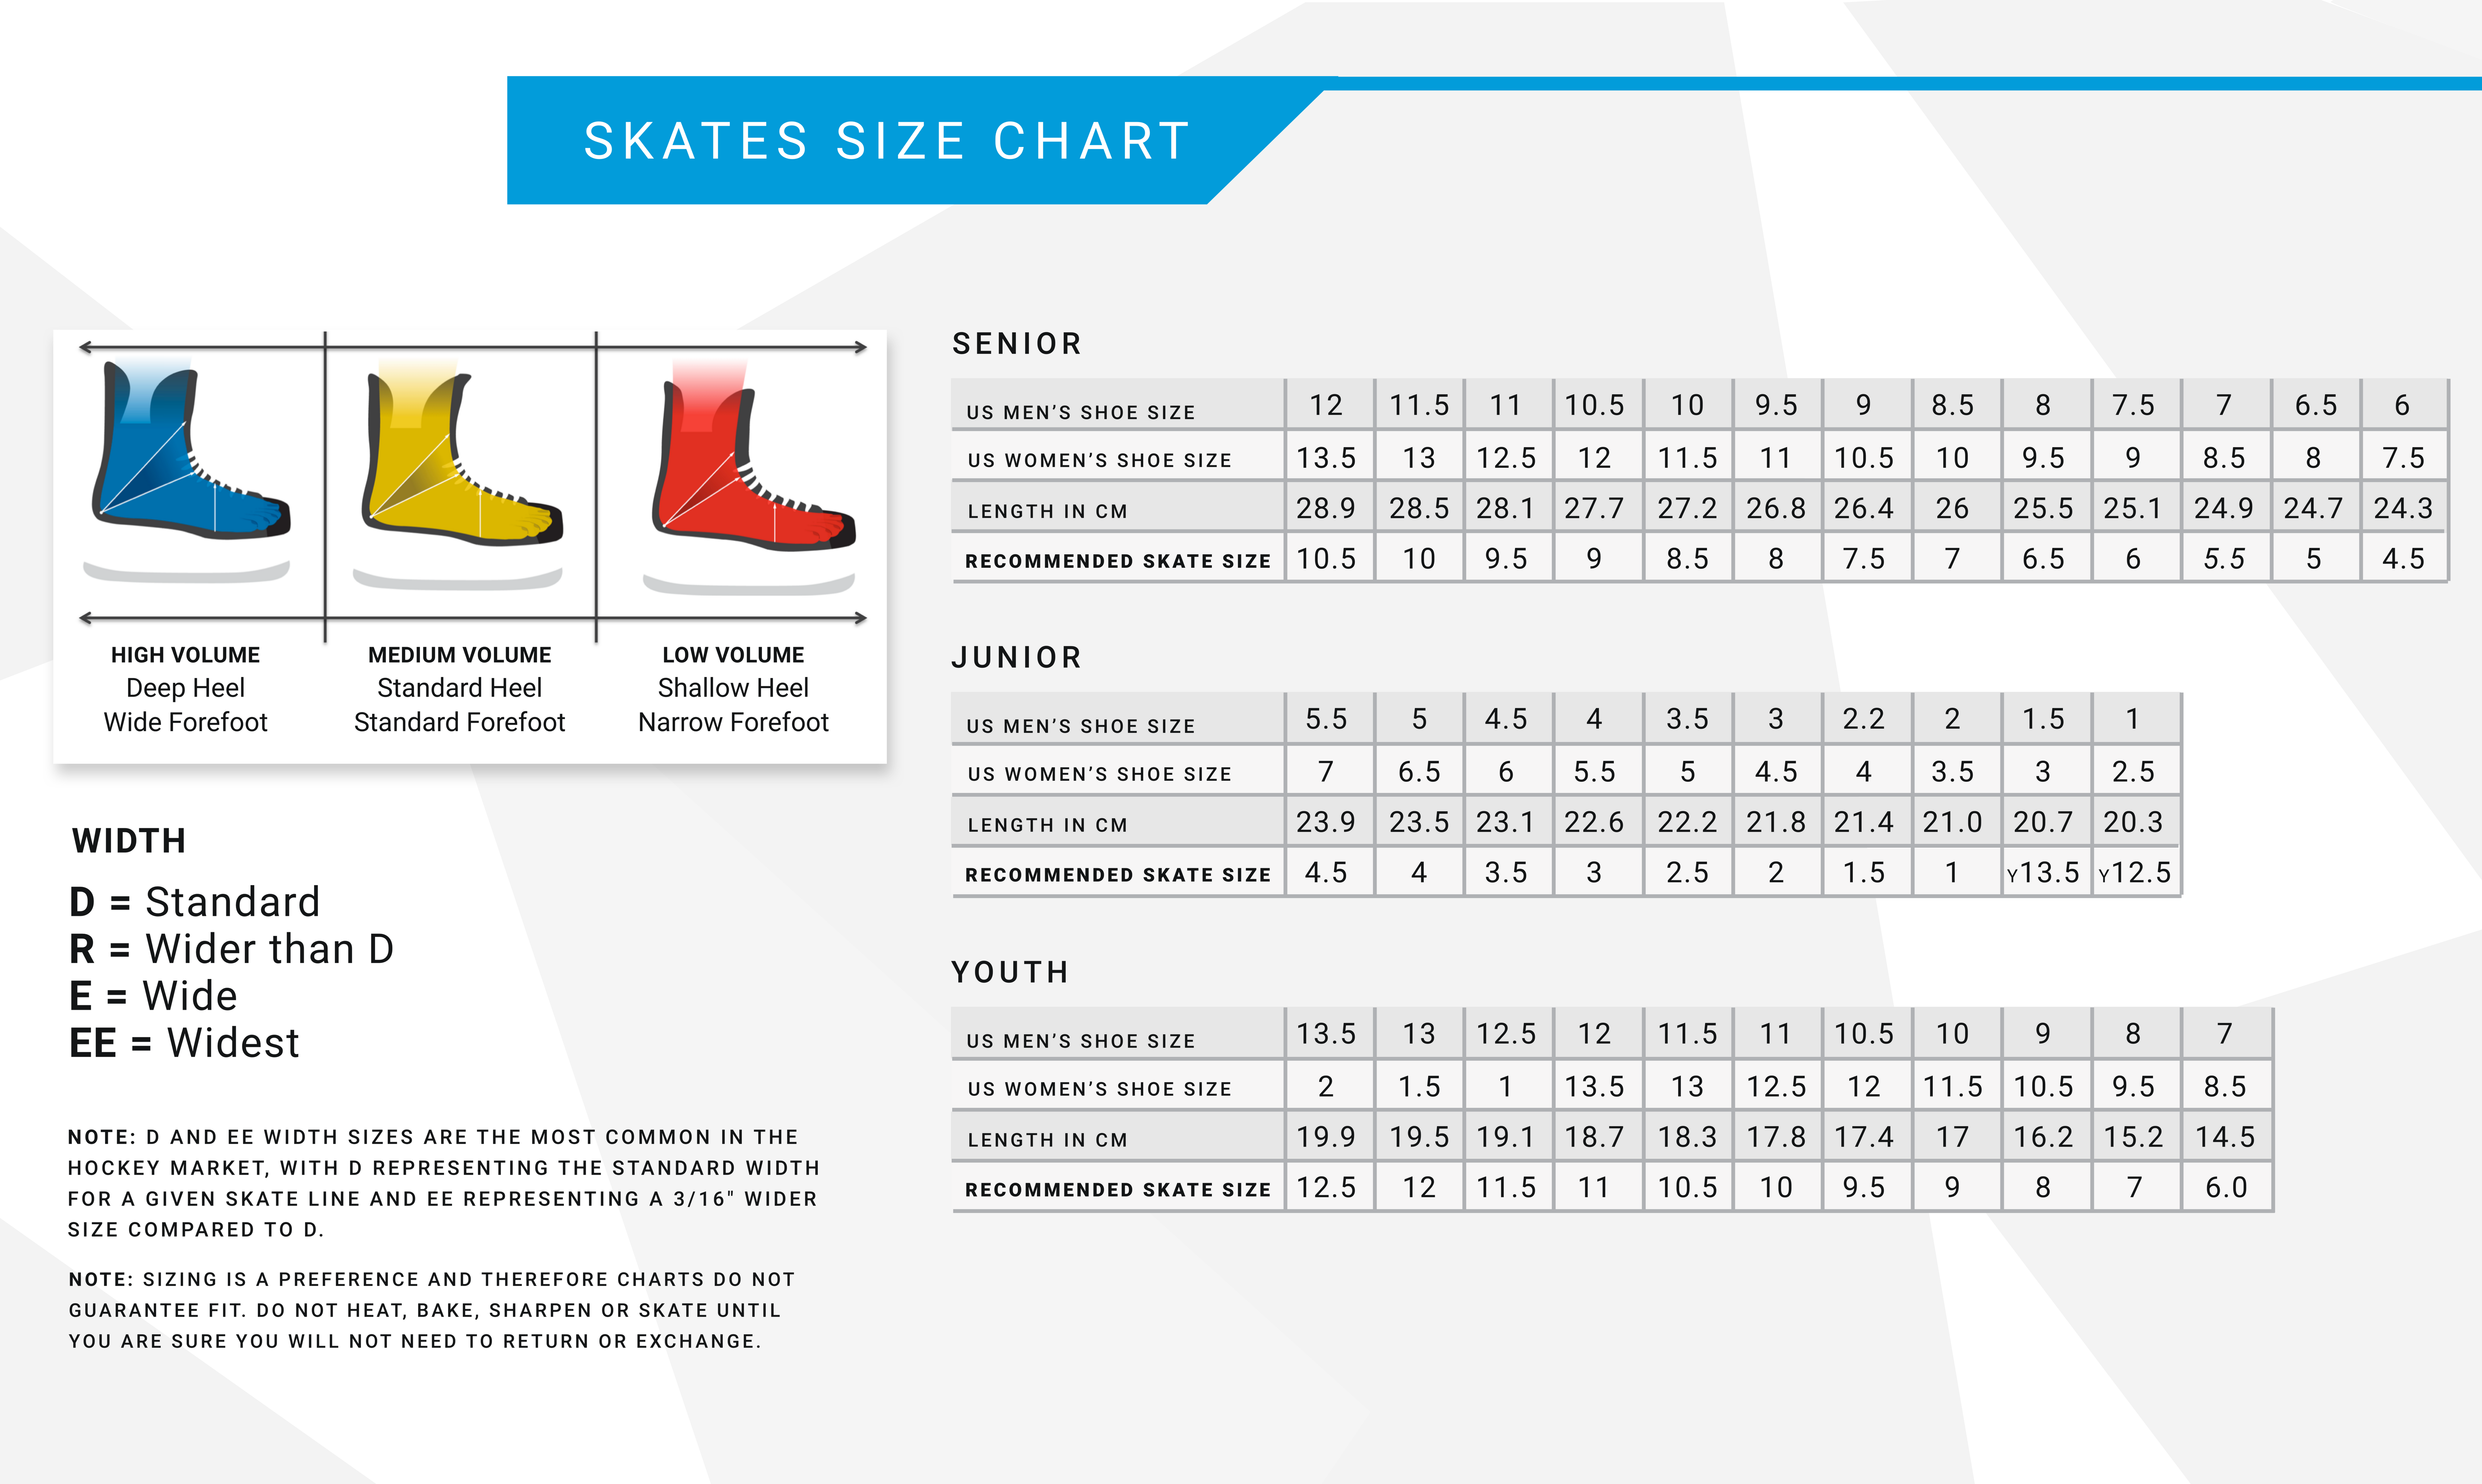 Skates Size Chart@3x 1 